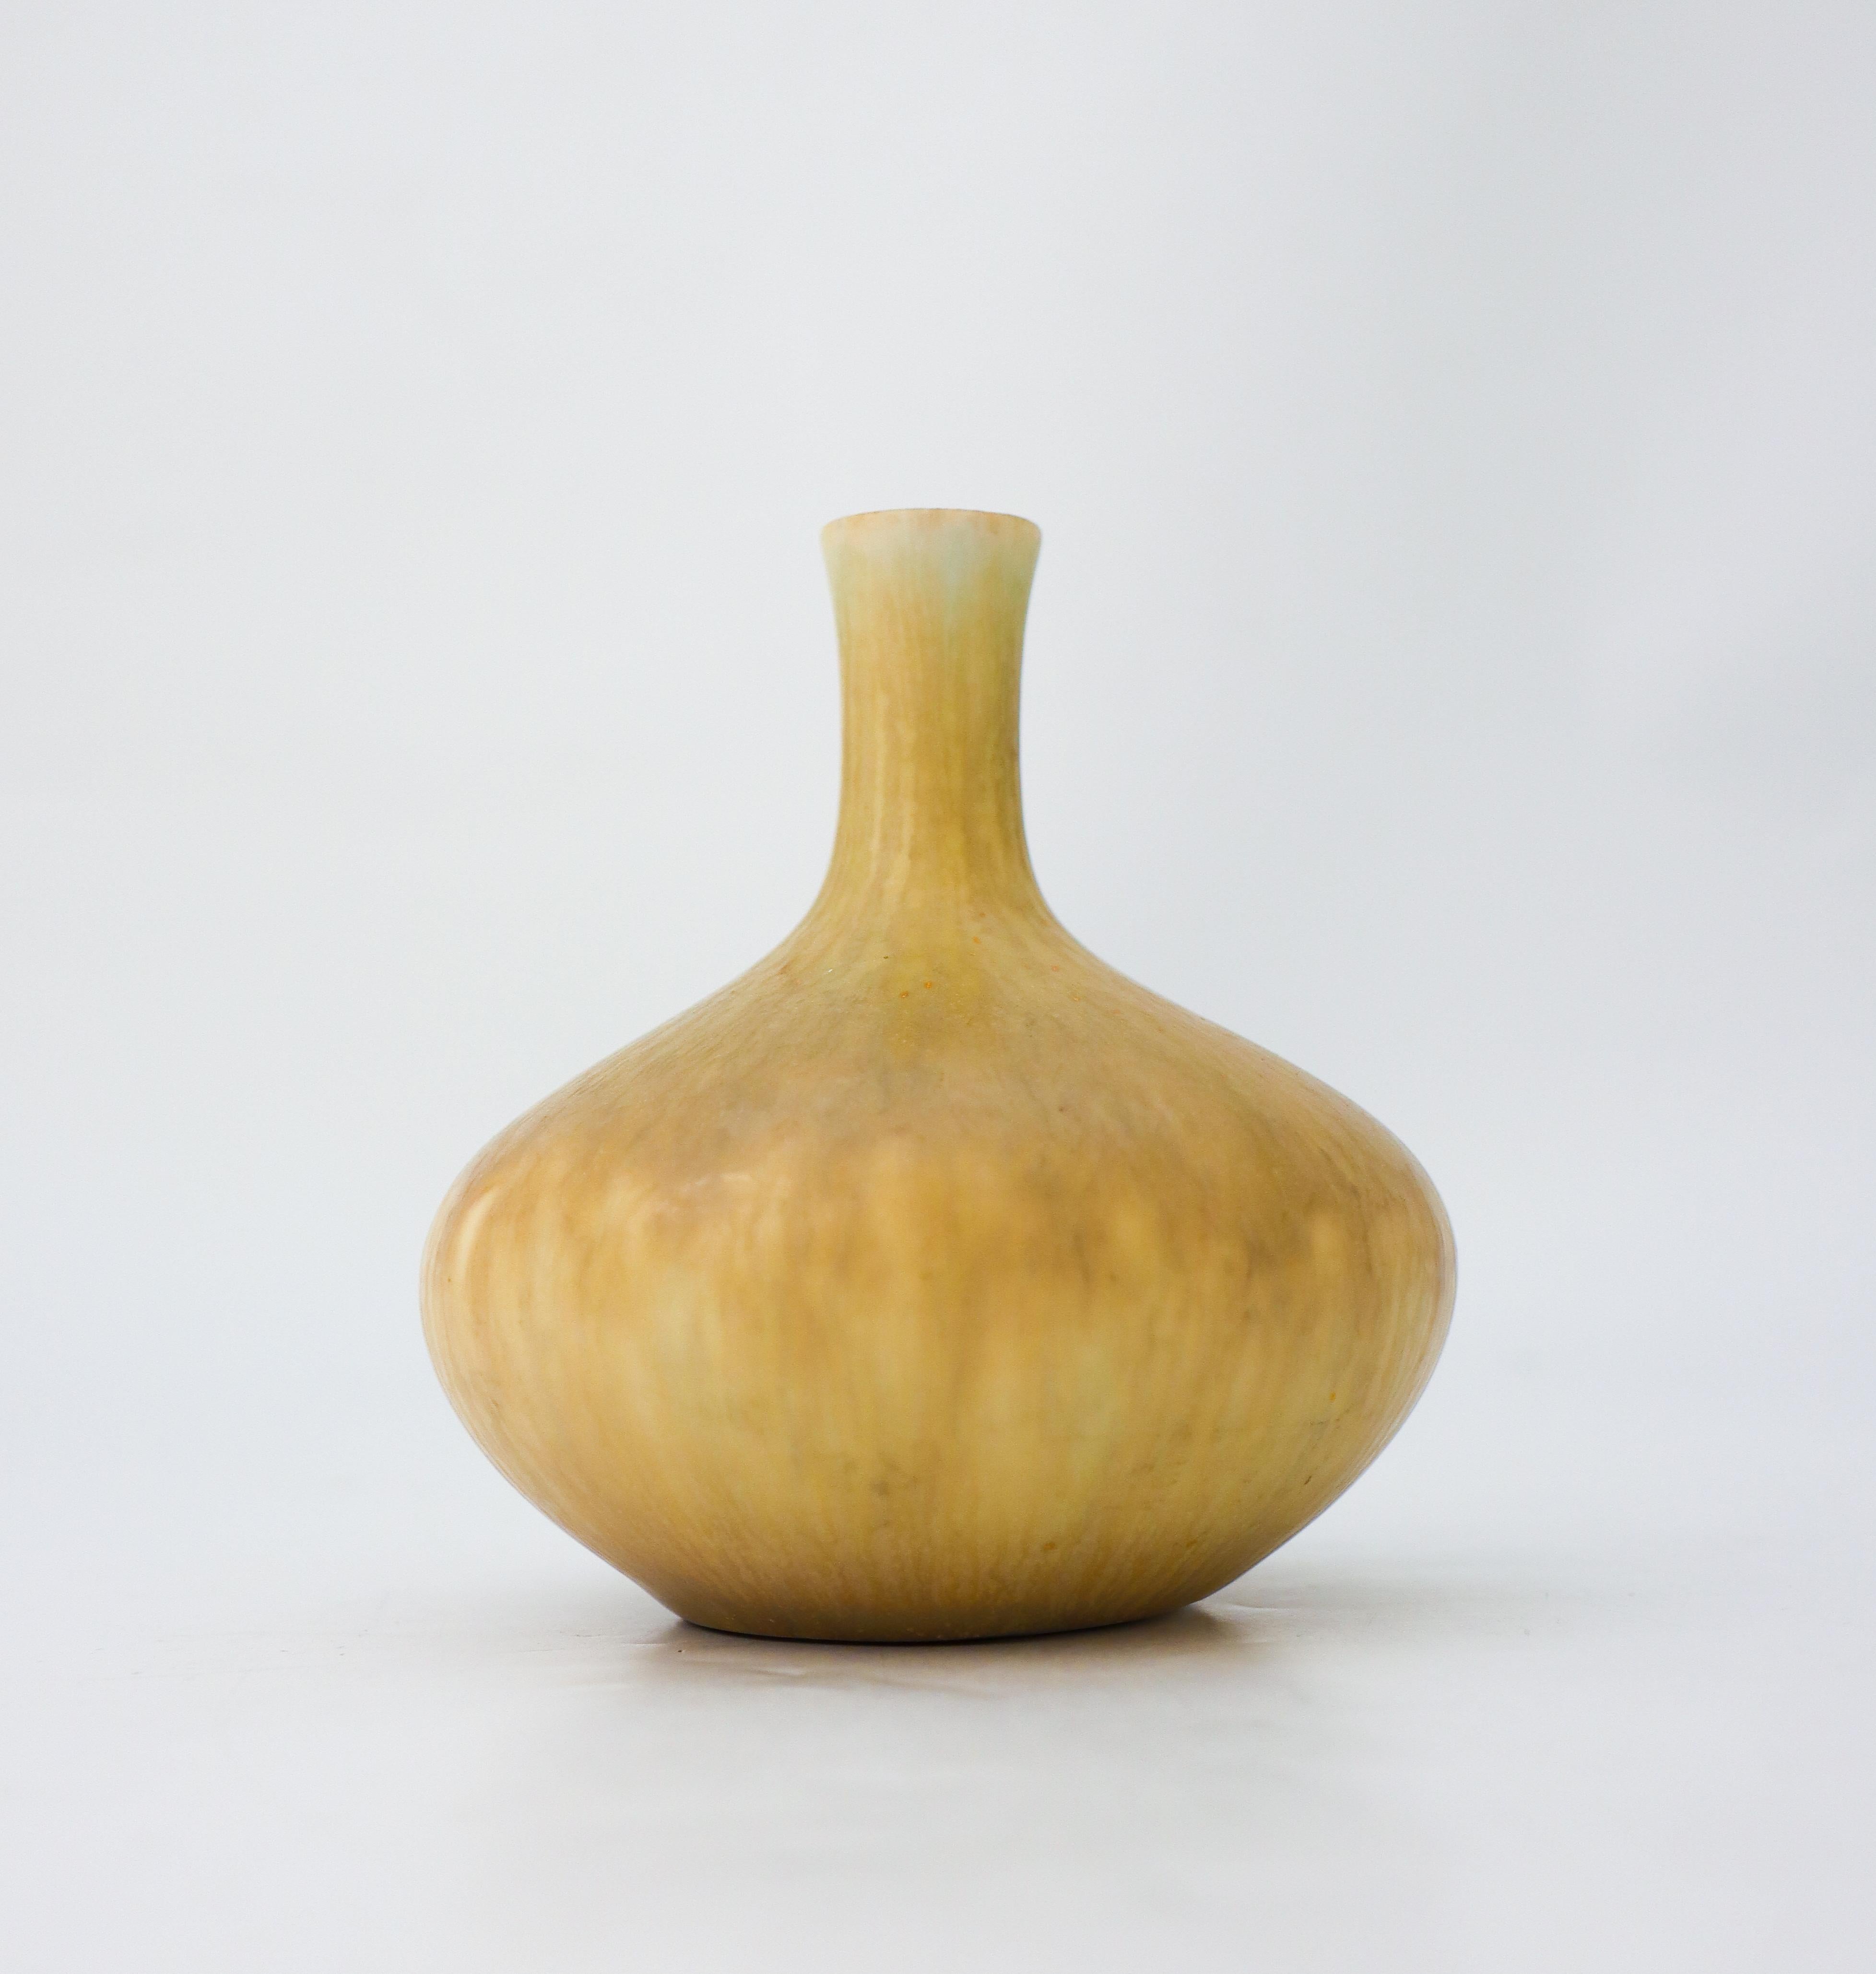 A dark yellow vase designed by Carl-Harry Stålhane at Rörstrand. The vase is 10.5 cm (4.2